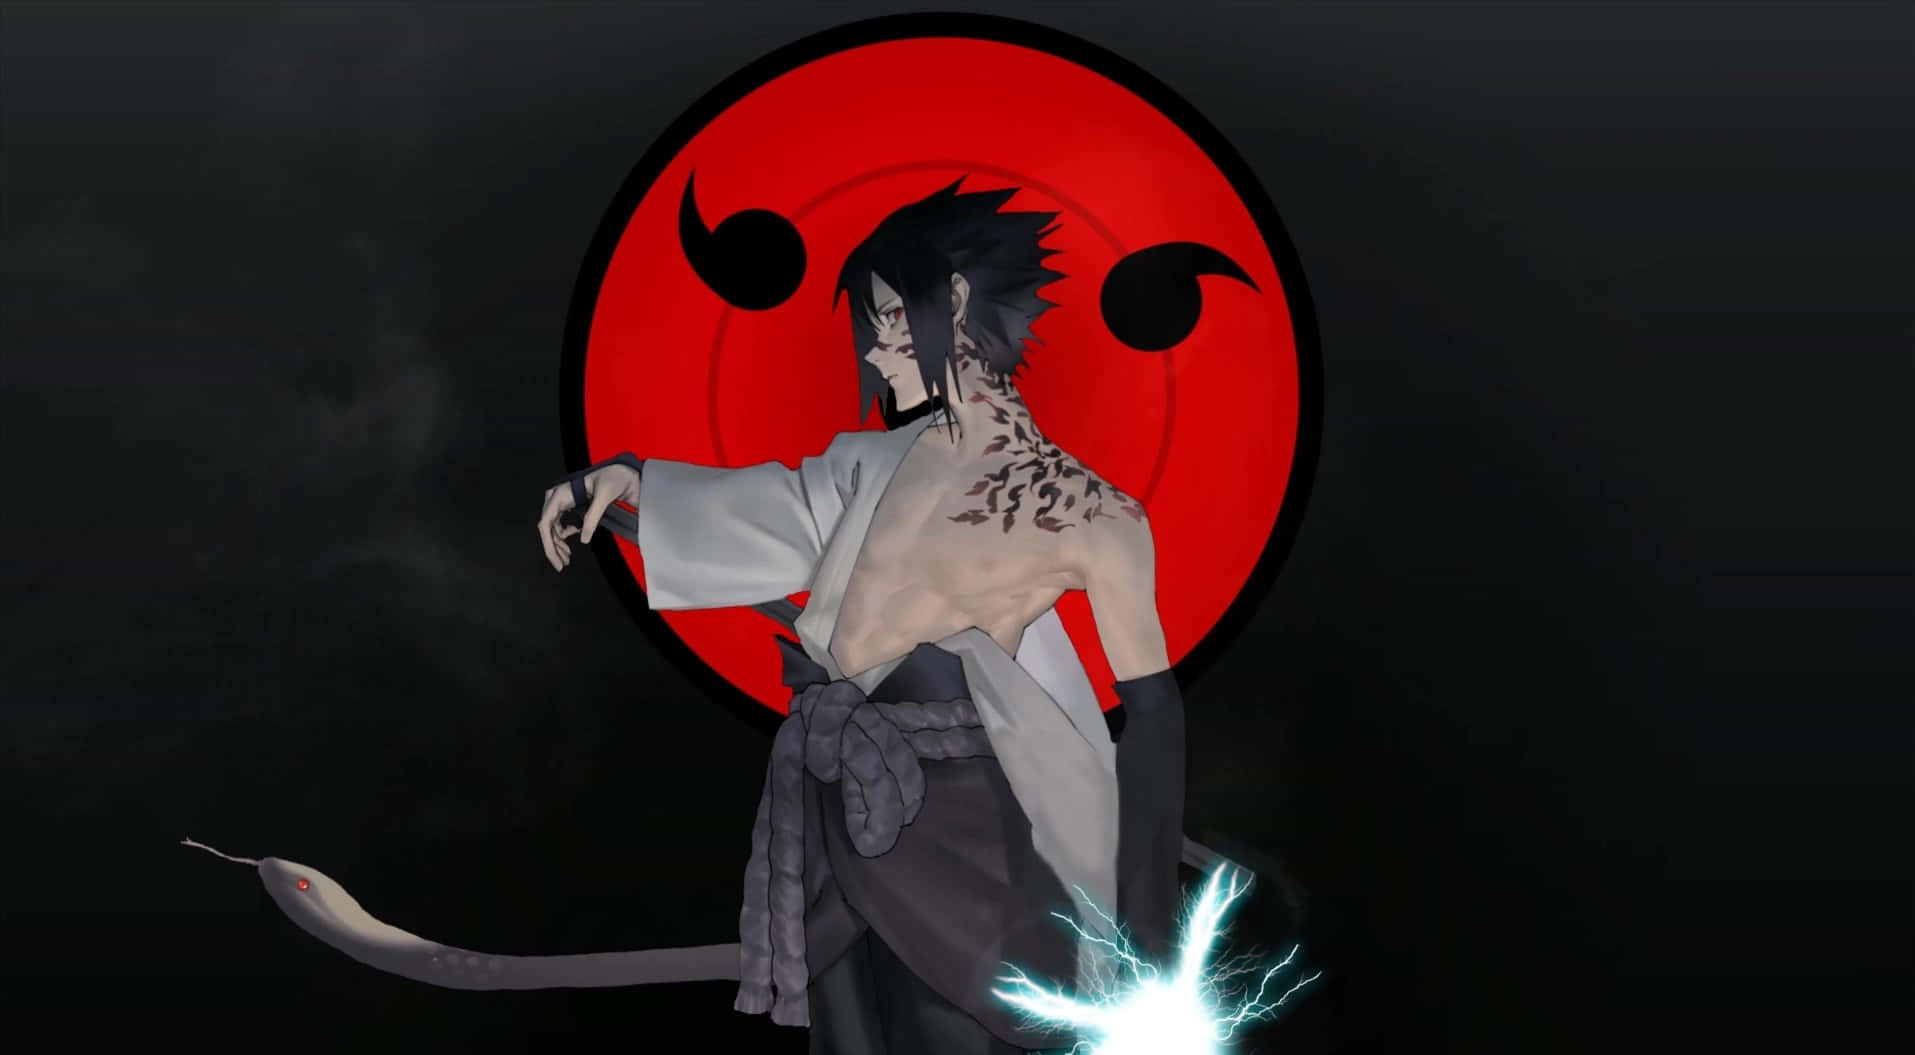 Hintergrundbildvon Sasuke